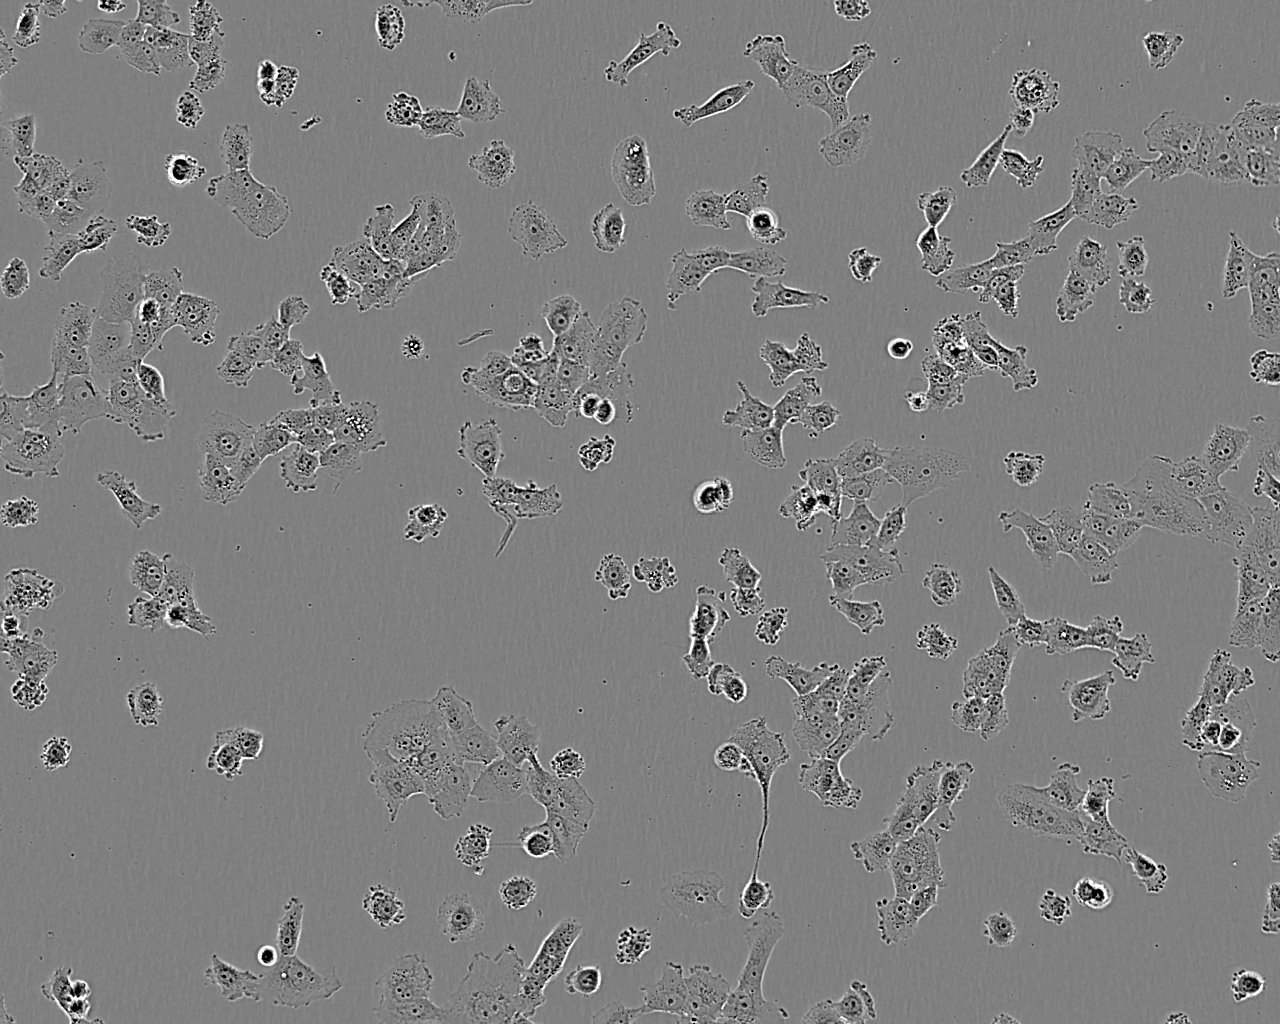 BpRc1 epithelioid cells小鼠肝癌细胞系